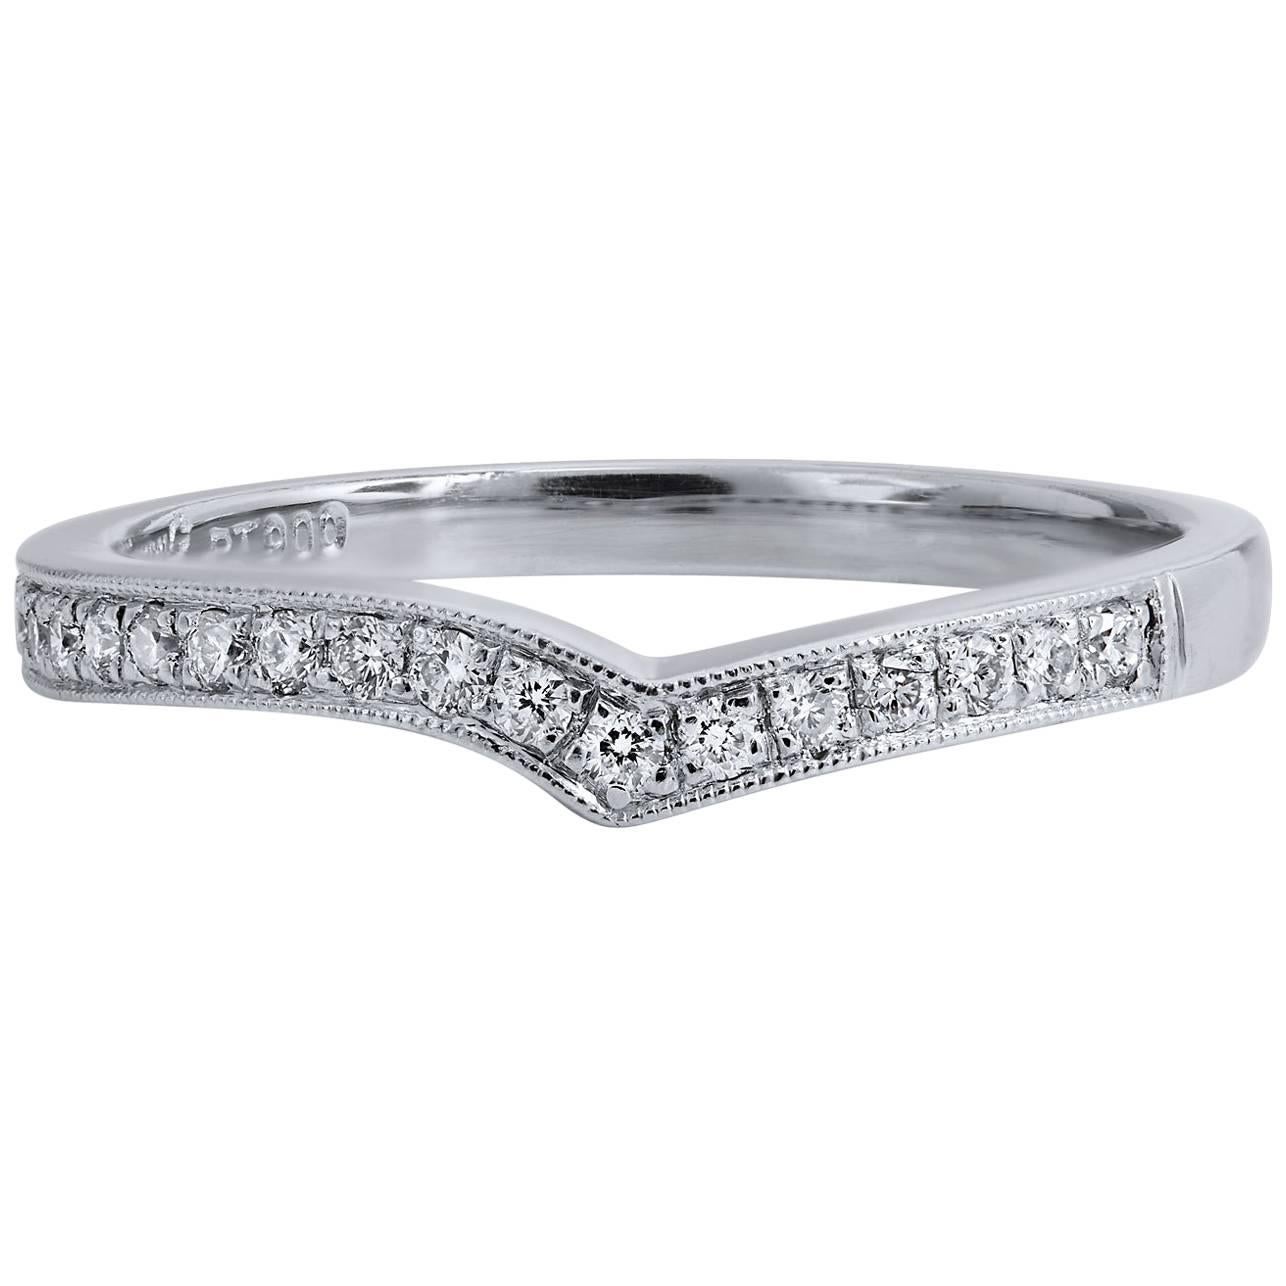 0.16 Carat Pave Diamond Free-Form Band Ring